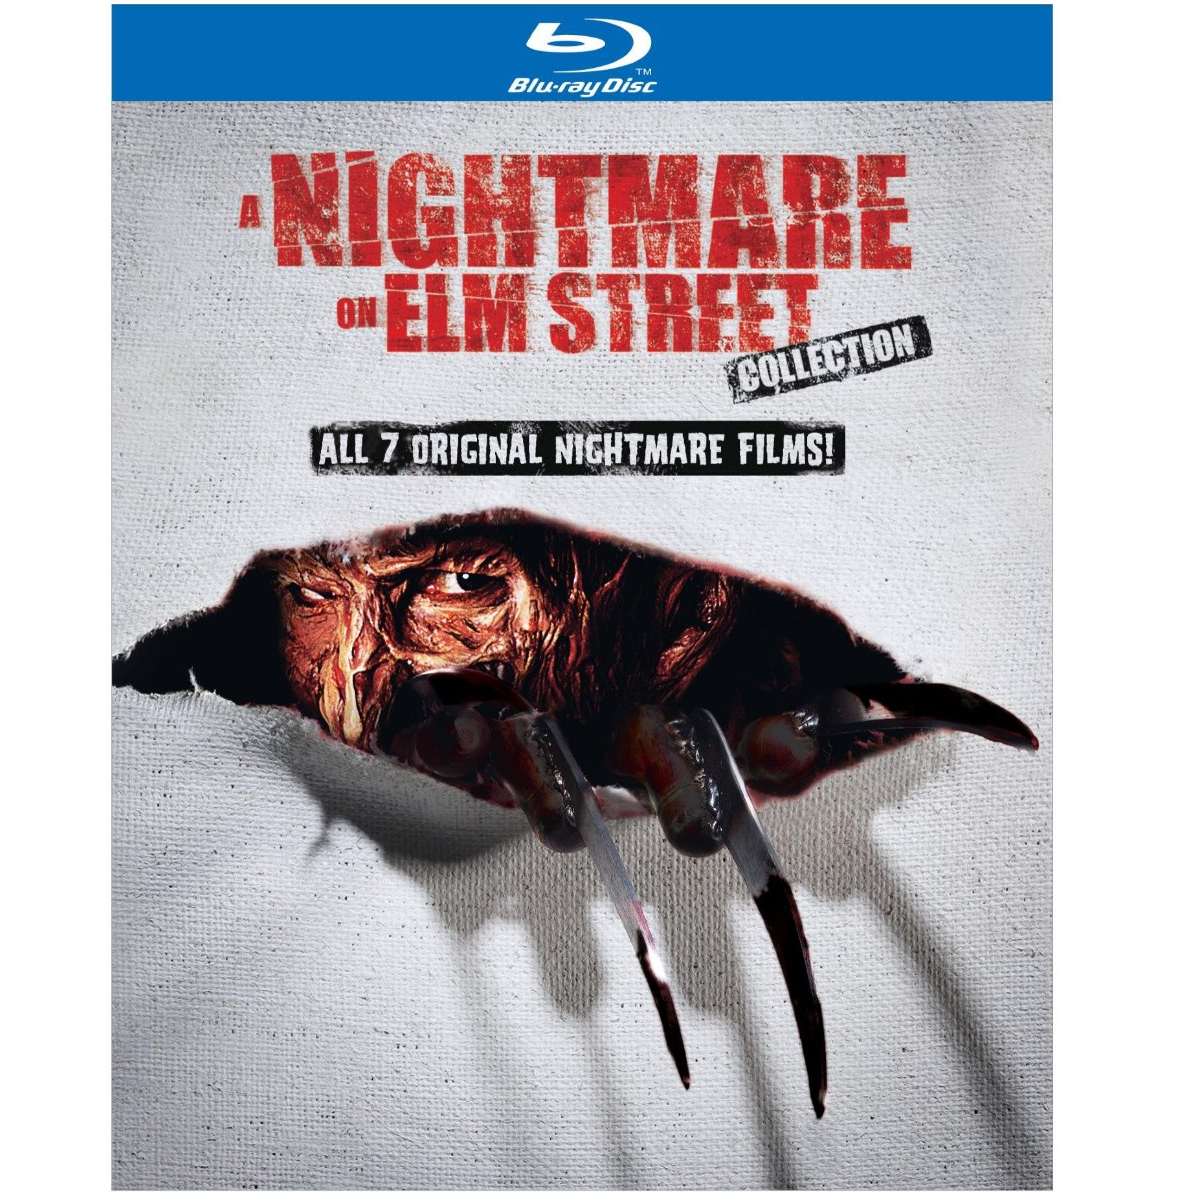 A Nightmare on Elm Street Collection (All 7 Original Nightmare Films + Bonus Disc) on Blu-ray Only $24.99 on Amazon!